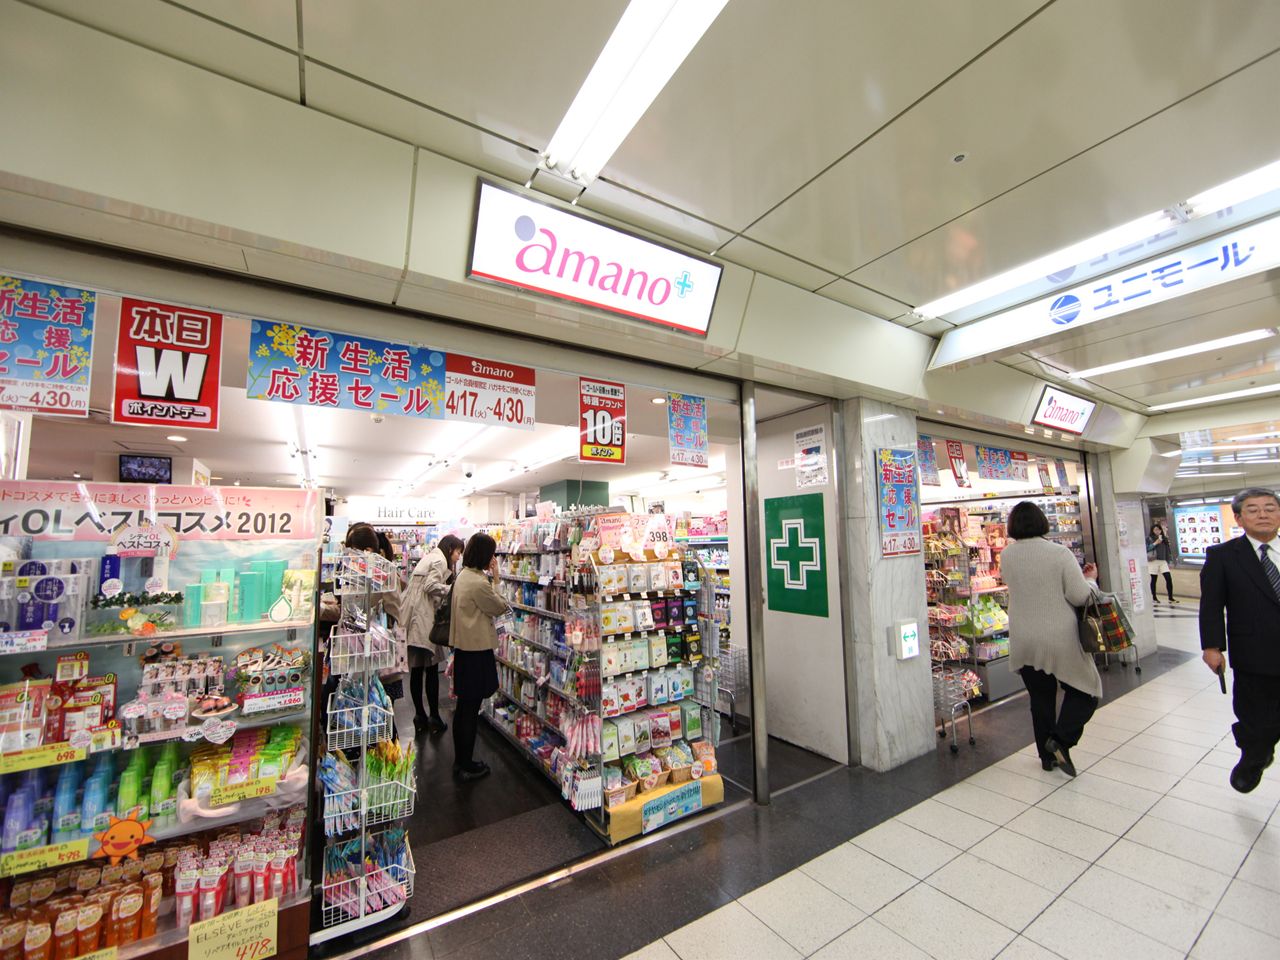 Dorakkusutoa. Pharmacy Amano drag Meichika shop 632m until (drugstore)